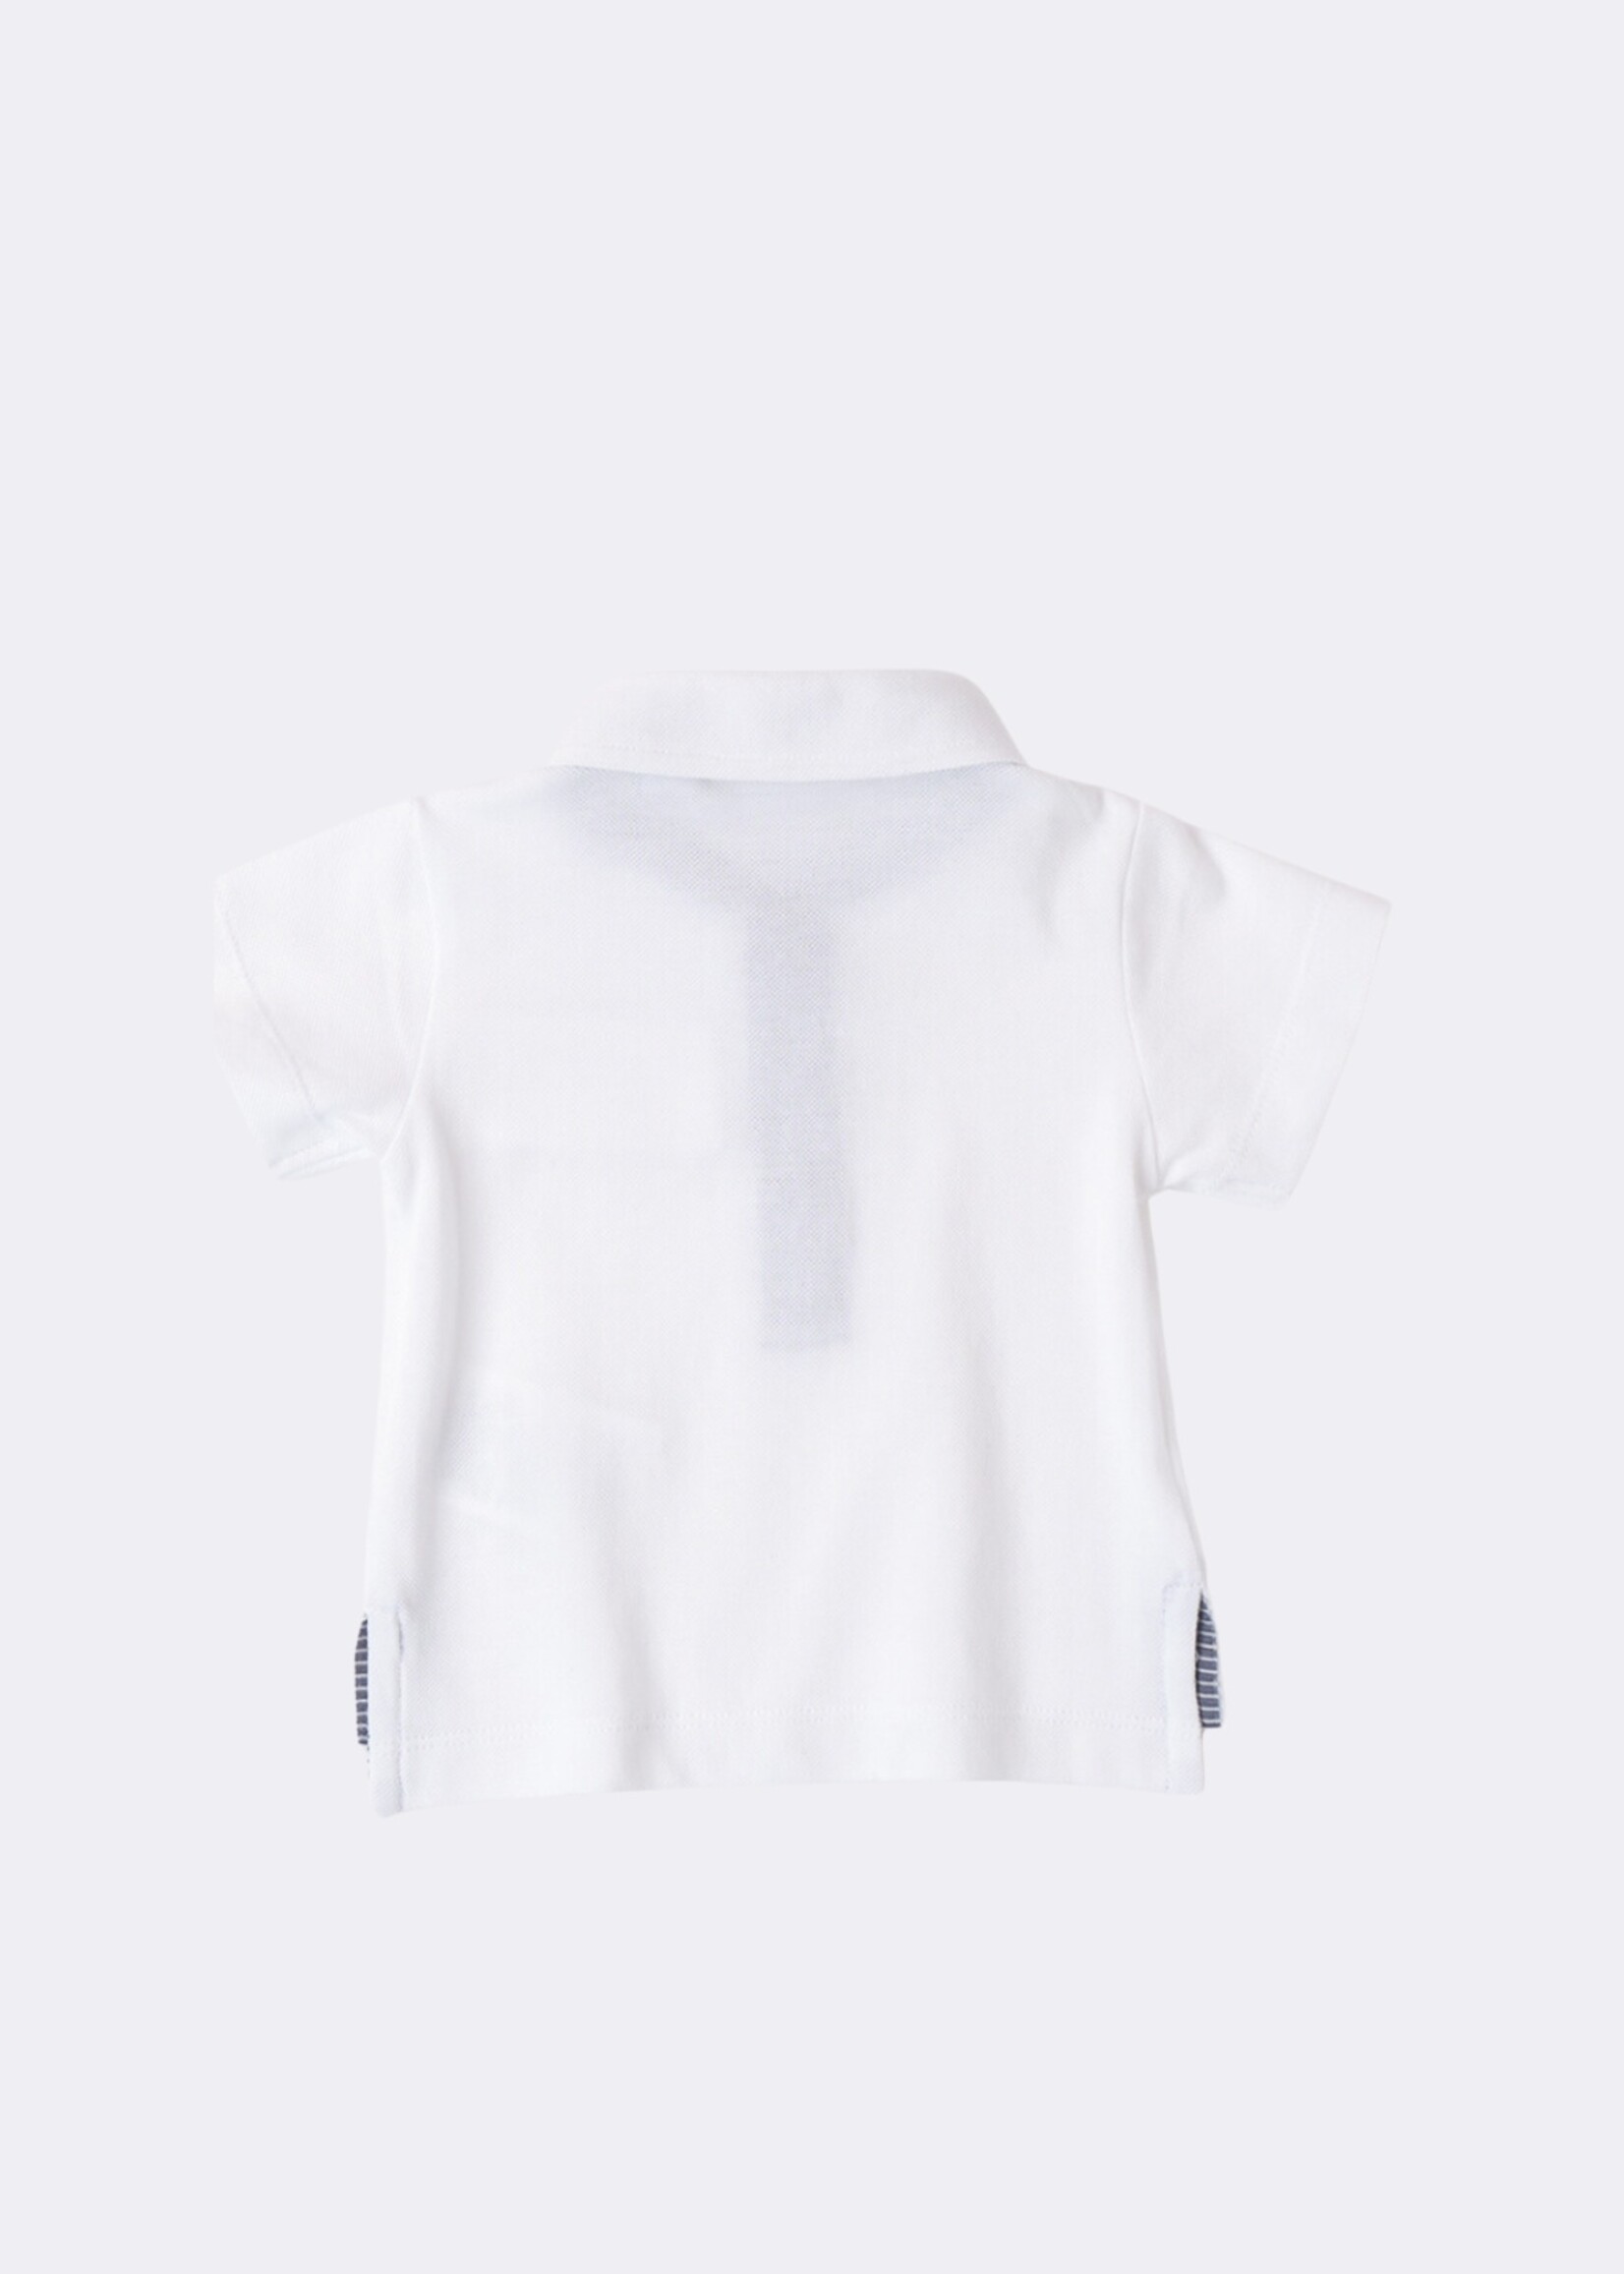 Minibanda 100% White Cotton Polo Shirt